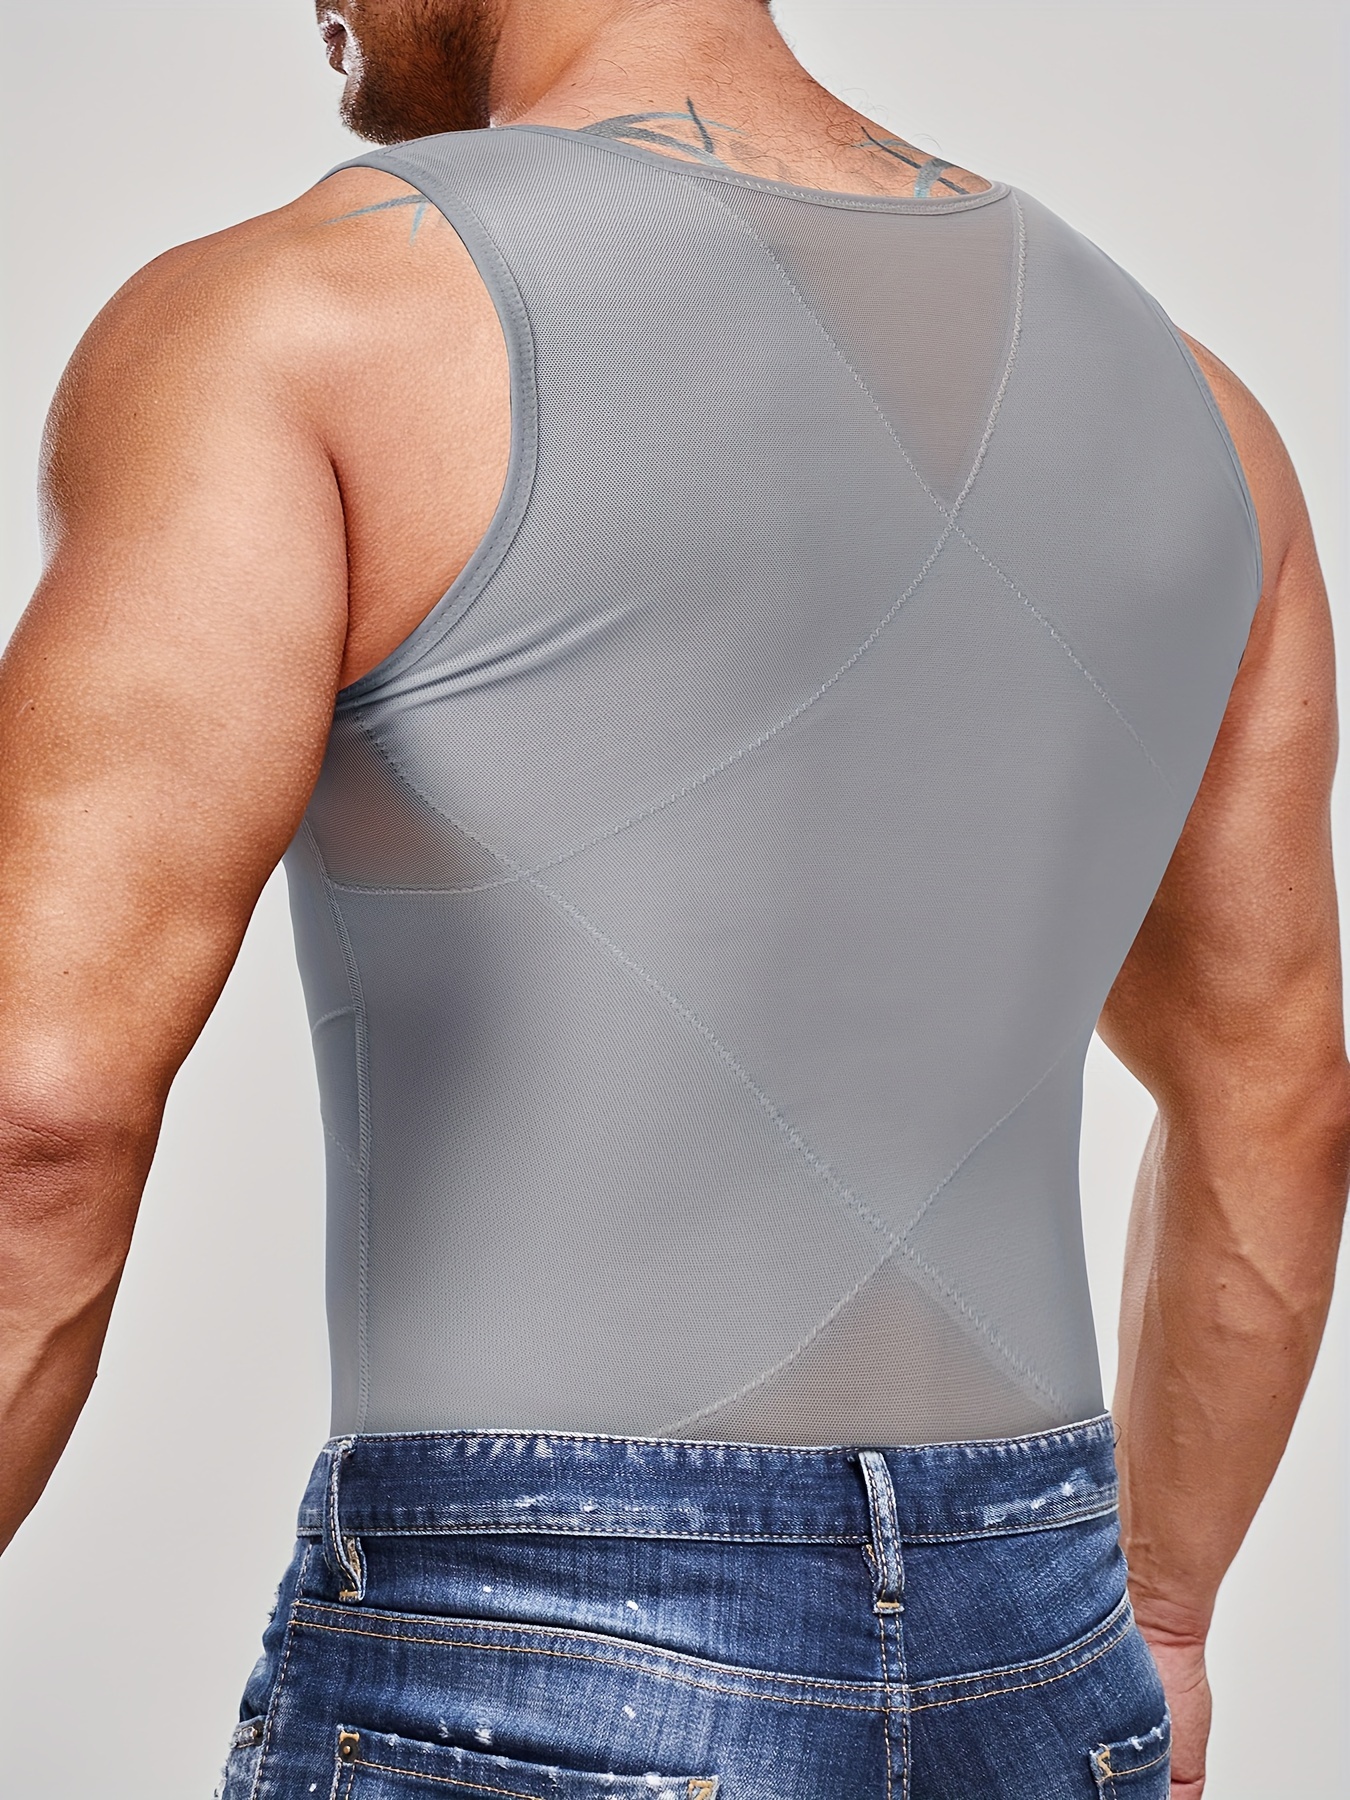 OLSIC Men Compression Shirt Slimming Body Shaper Vest Tummy Control  Shapewear Abdomen Undershirt Gym Workout Tank Top(Black)